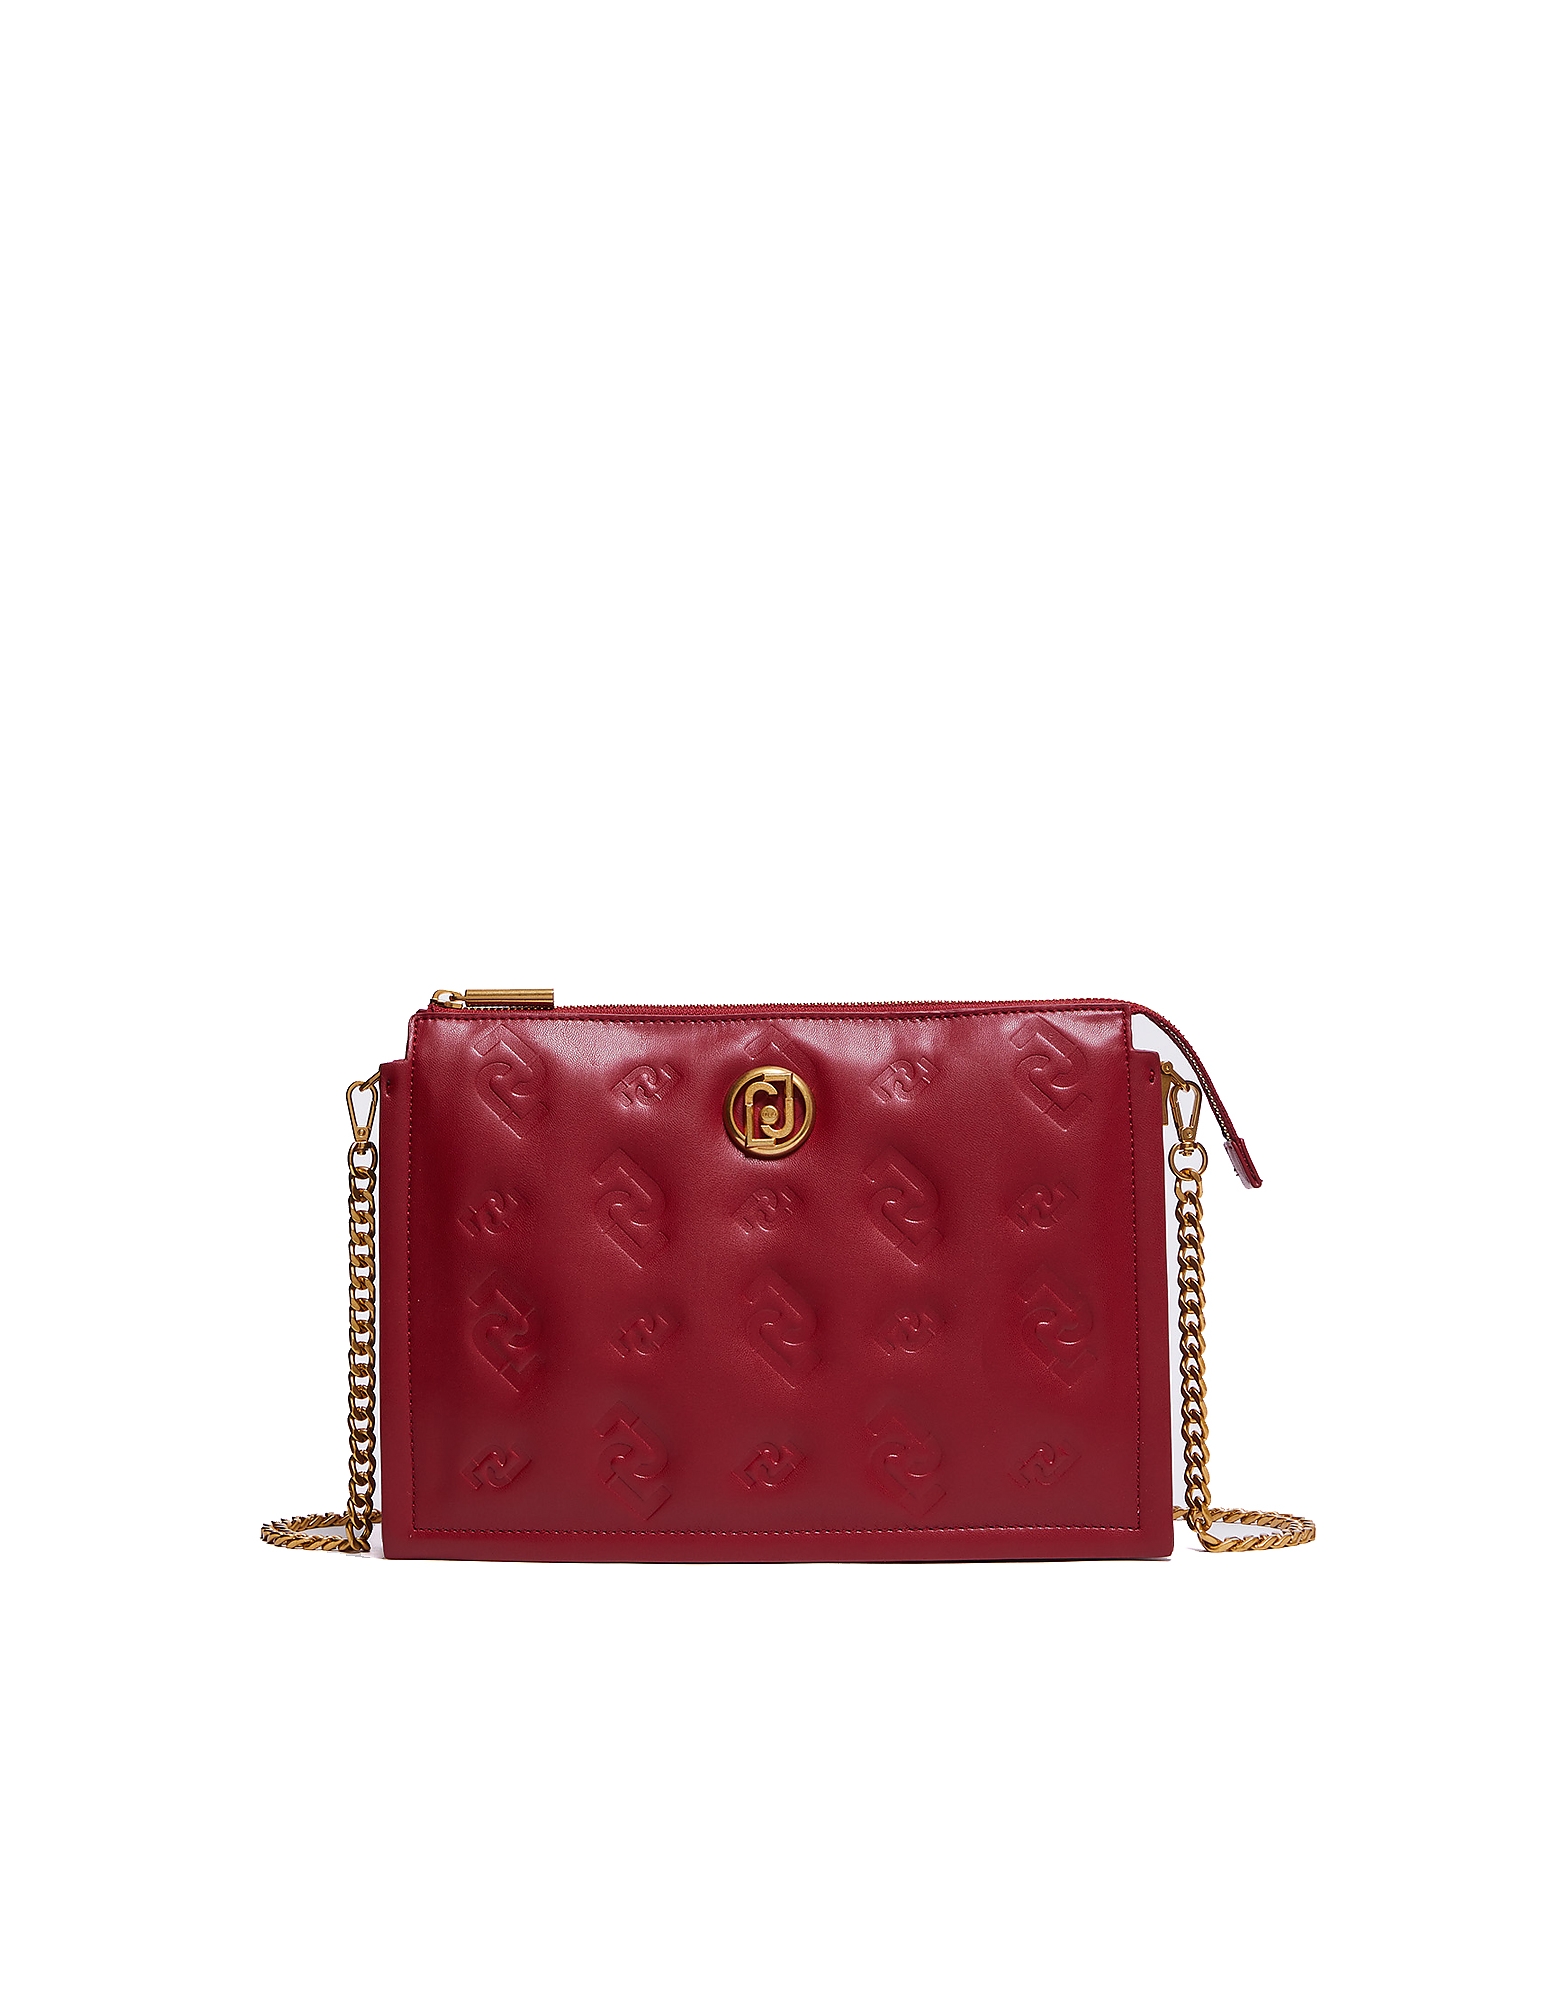 Liu •jo Designer Handbags Women's Bag In Burgundy